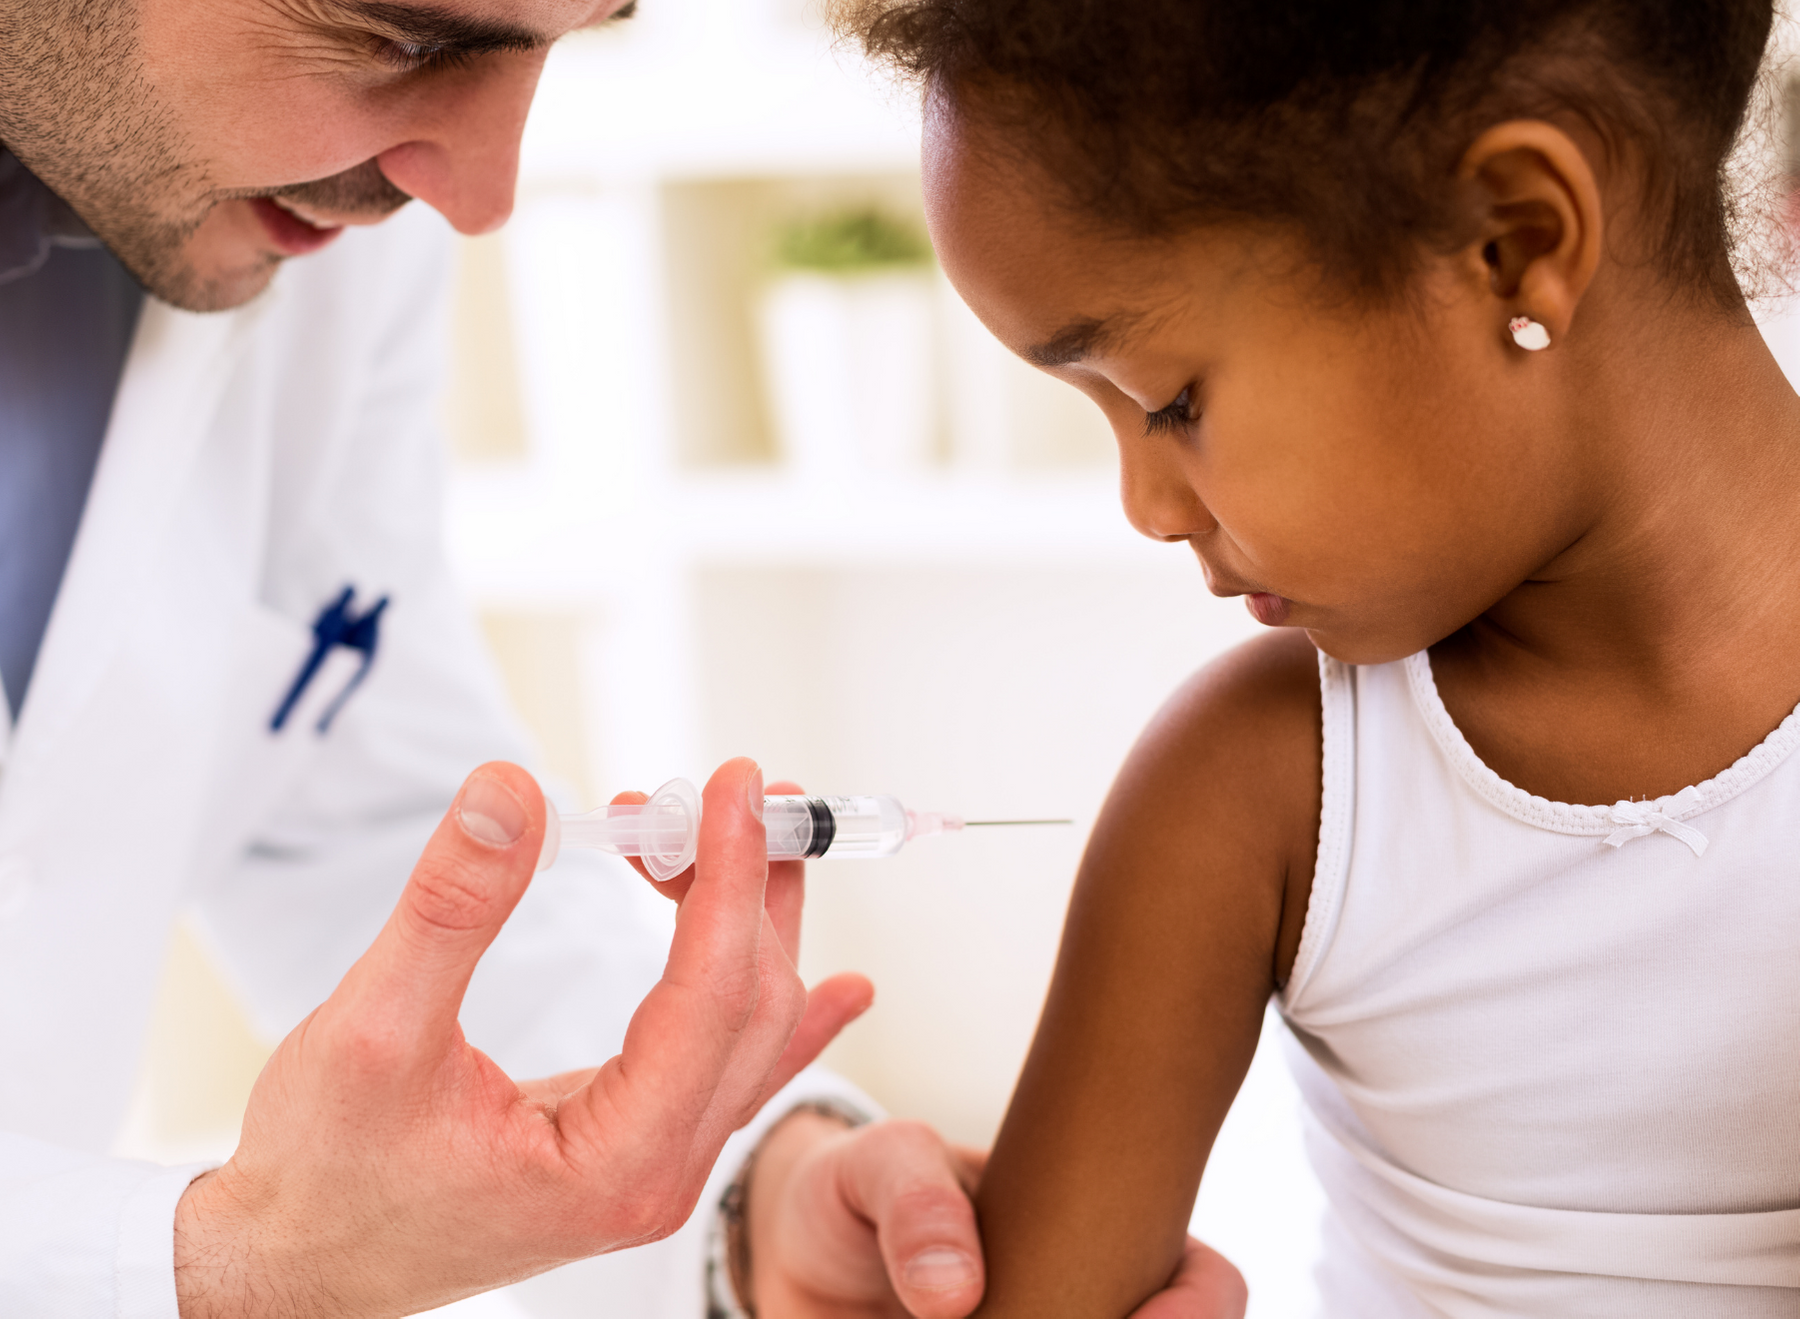 Pediatric vaccine